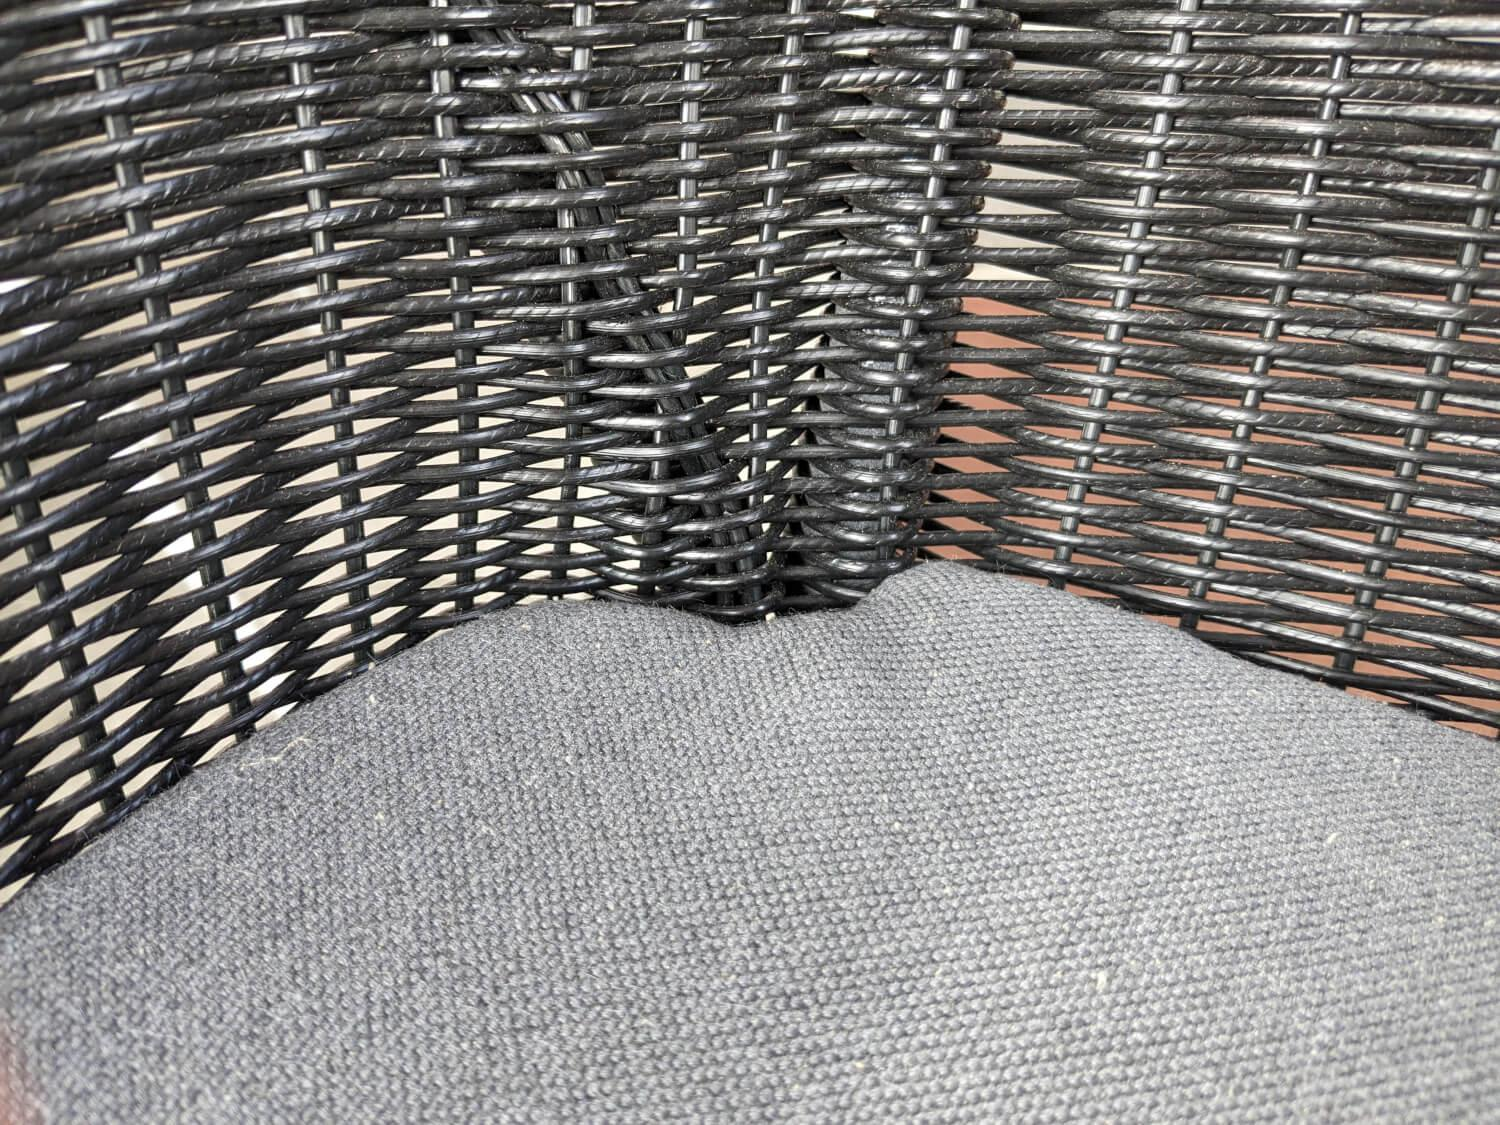 4er Set Outdoor-Sessel Breeze Cane -Line Faser Natte Grau Aluminium